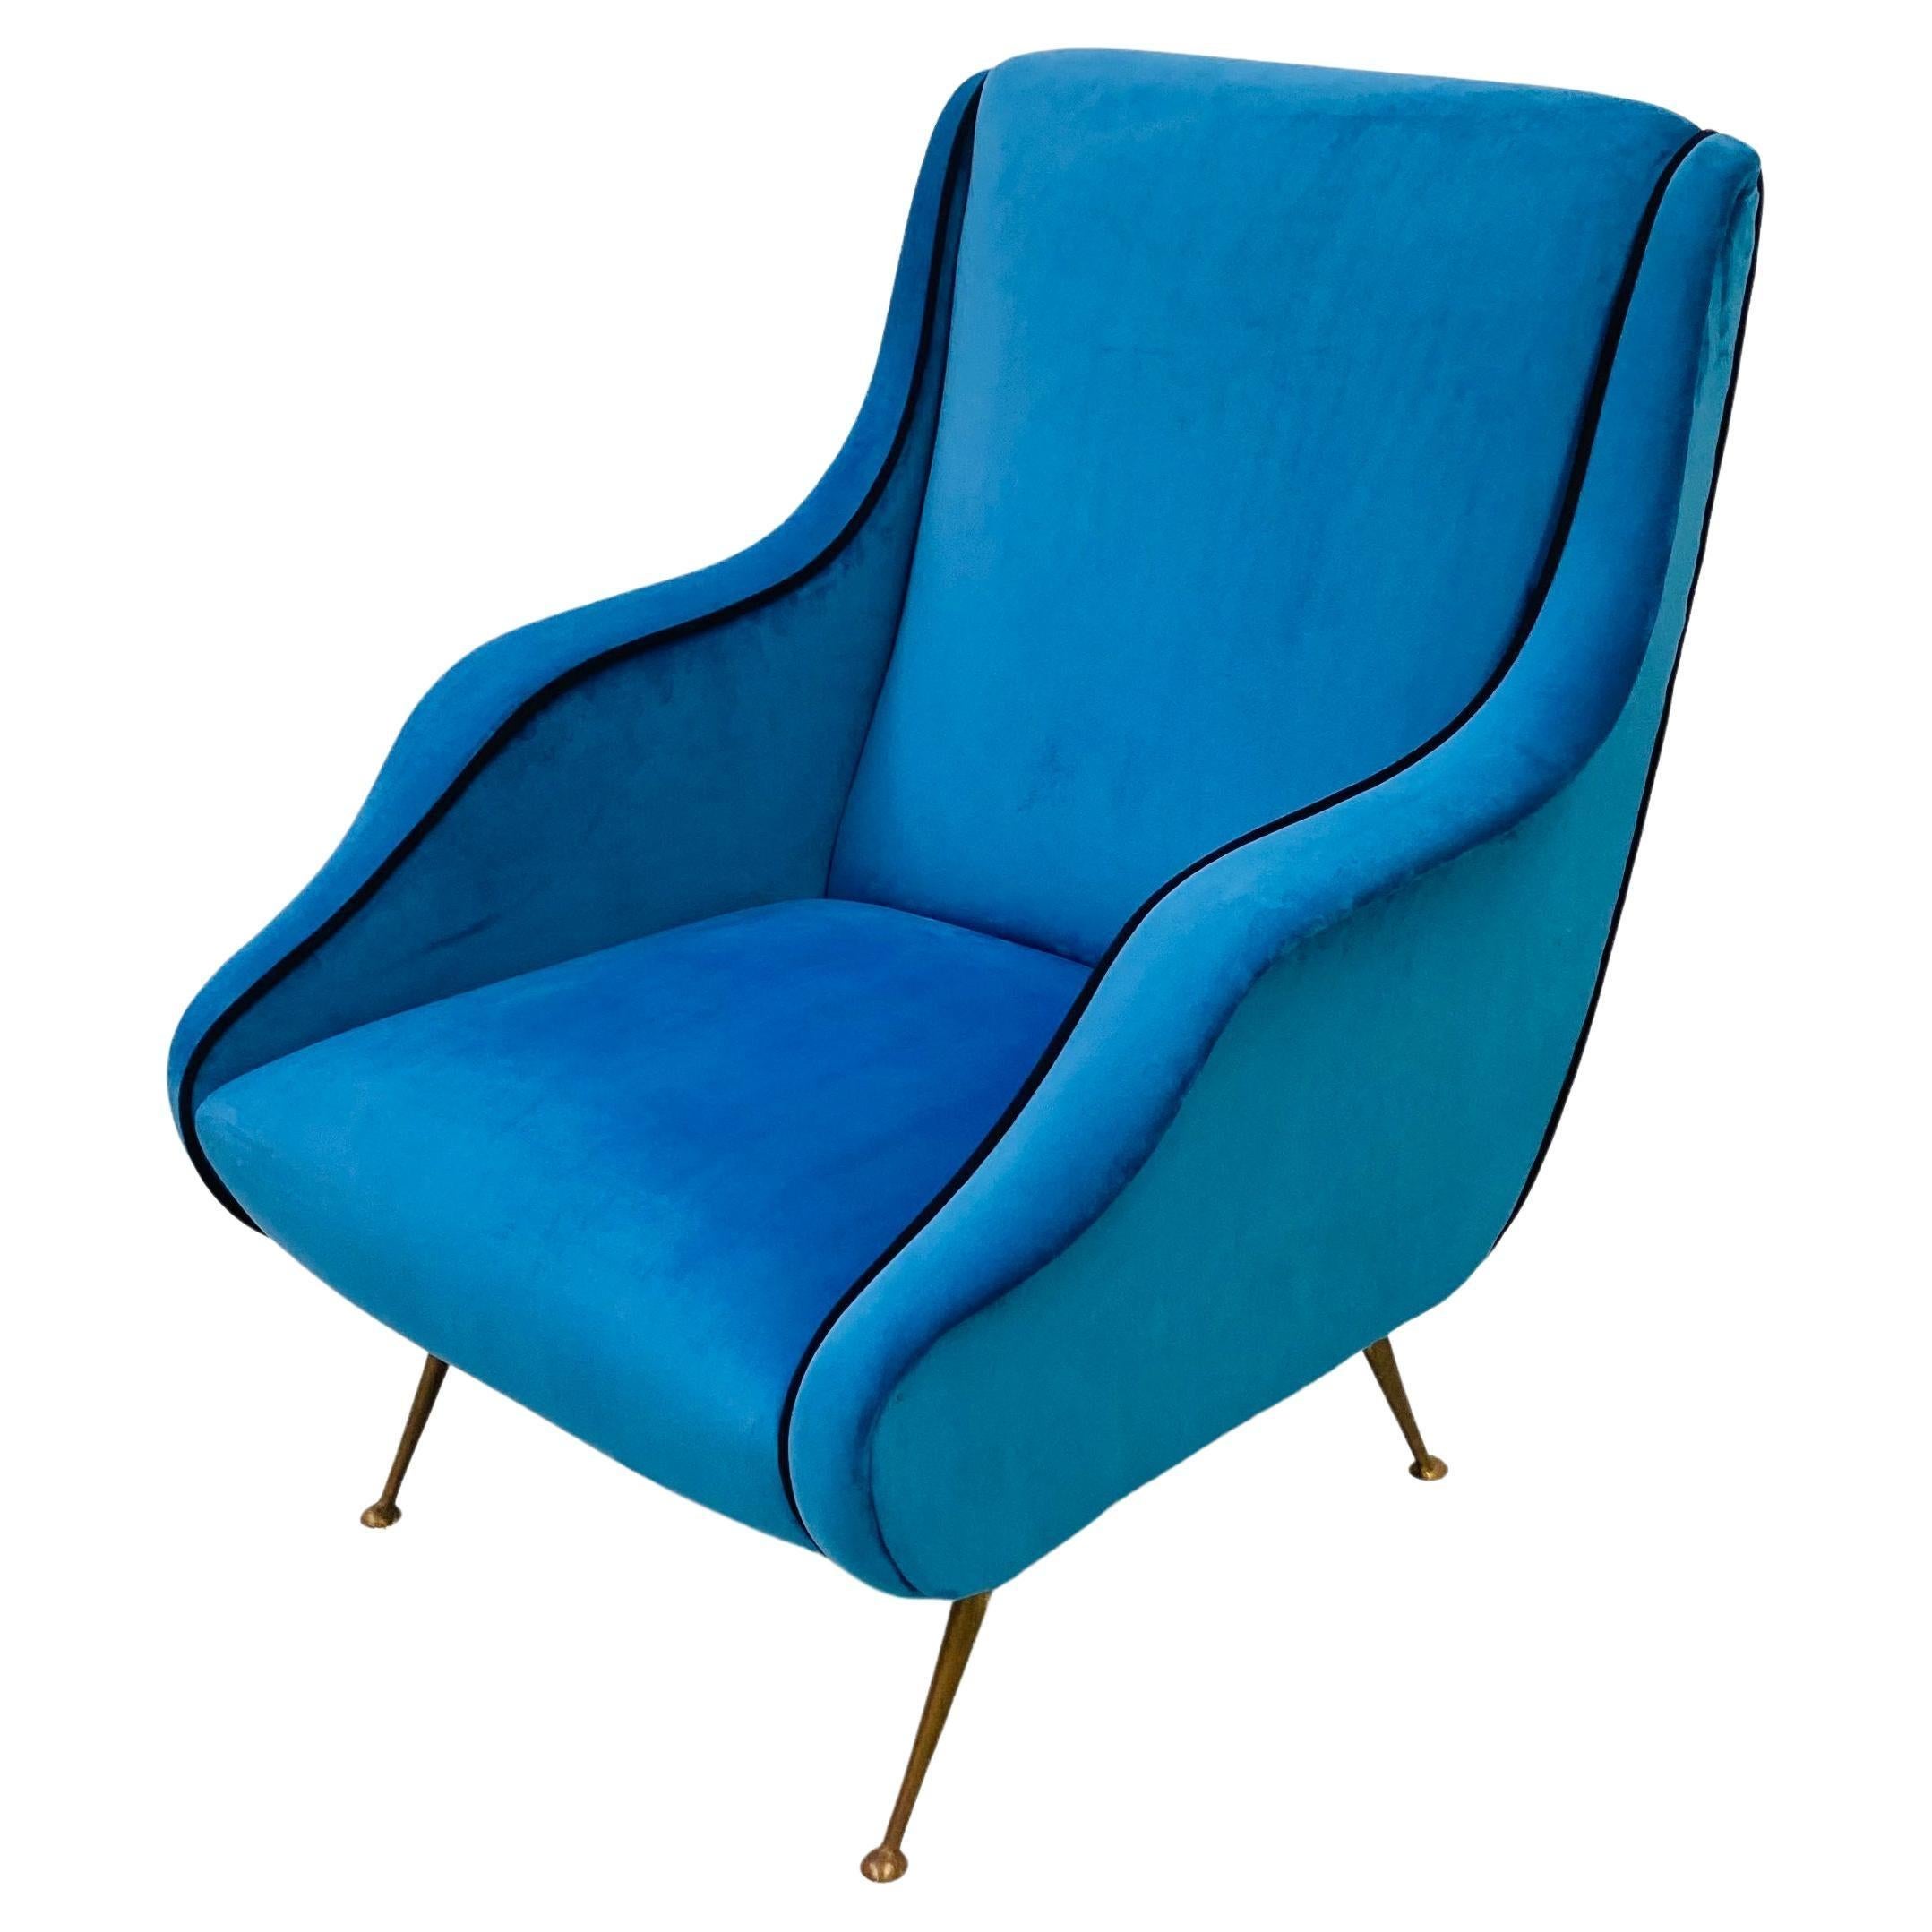 Vintage Italian Blue Velvet Armchair with Brass Legs by Carlo de Carli, 1950s For Sale 6